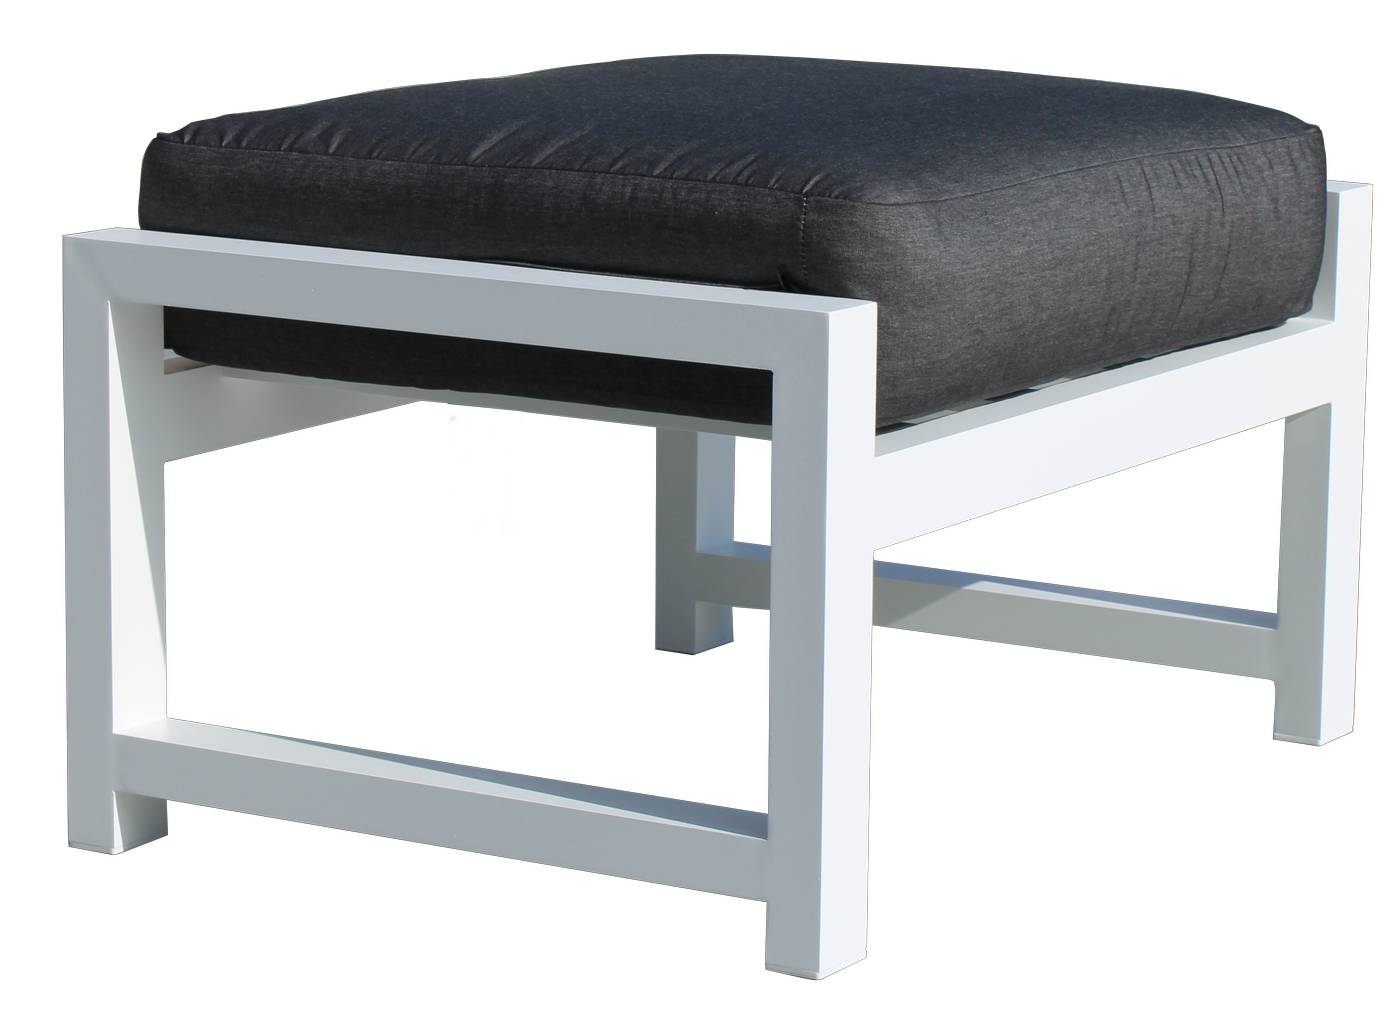 Set Aluminio Ilinois-10 - Conjunto de aluminio con cojines extra grandes: sofá de 3 plazas + 2 sillones + 1 mesa de centro + 2 reposapiés. Colores: blanco, antracita, marrón, champagne o plata.